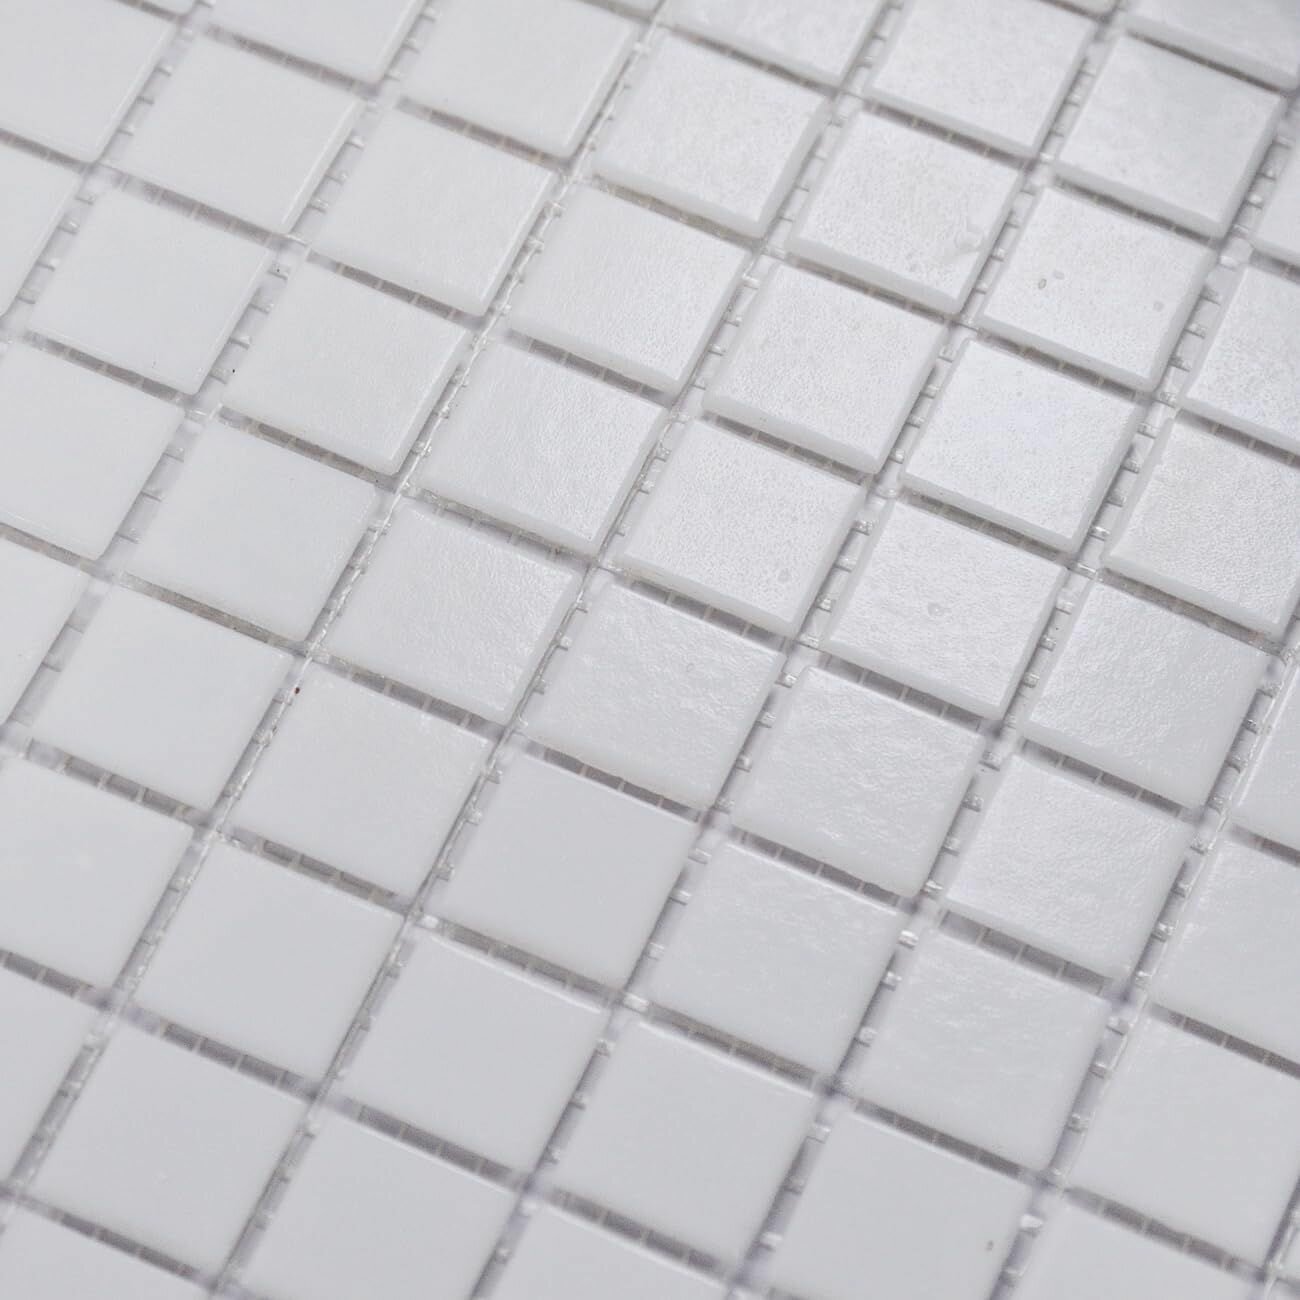 Плитка Мозаика Surface стеклянная белая (уп.20 шт) / на сетке 327х 327 мм / размер квадратика 20x20x4 мм/ толщина 4 мм